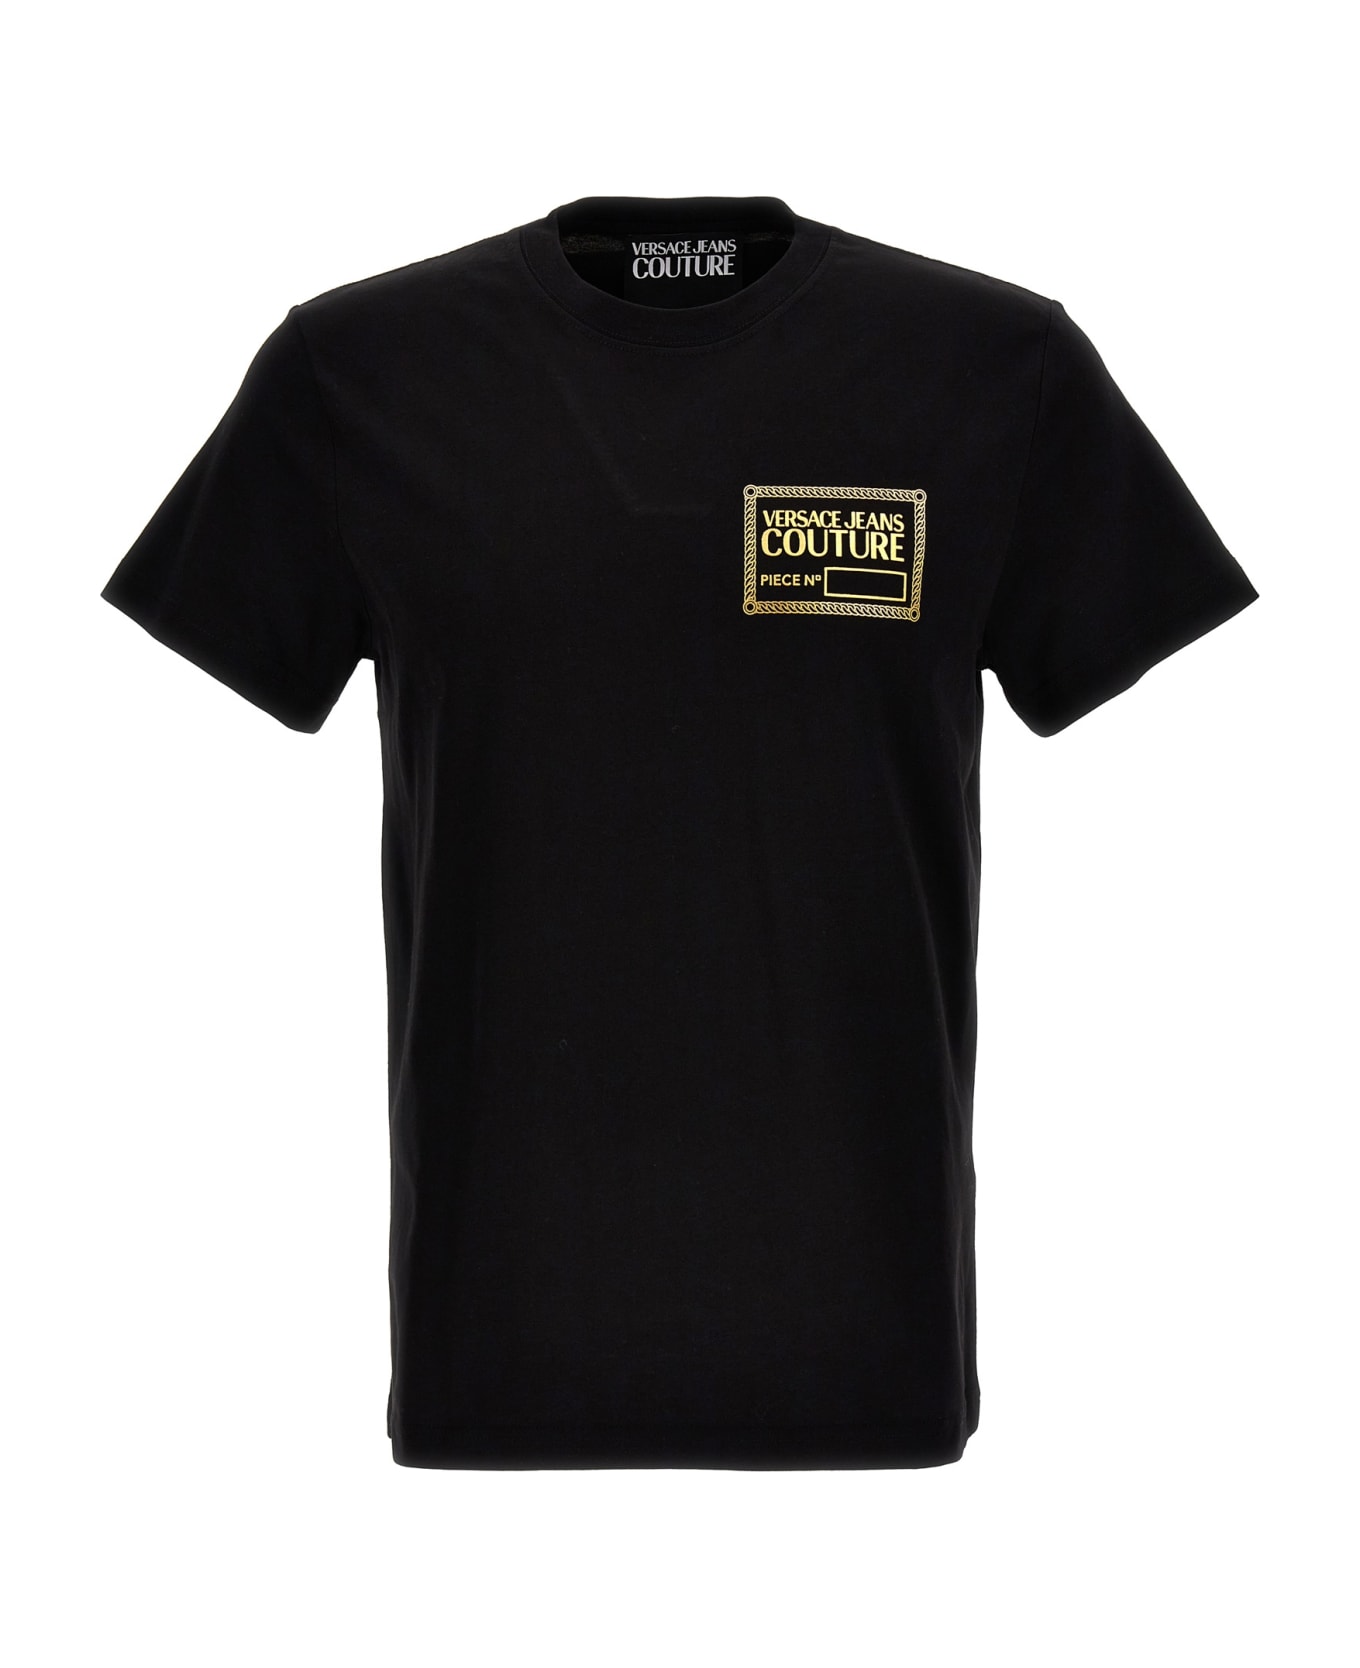 Versace Jeans Couture Logo Print T-shirt - Black Gold シャツ